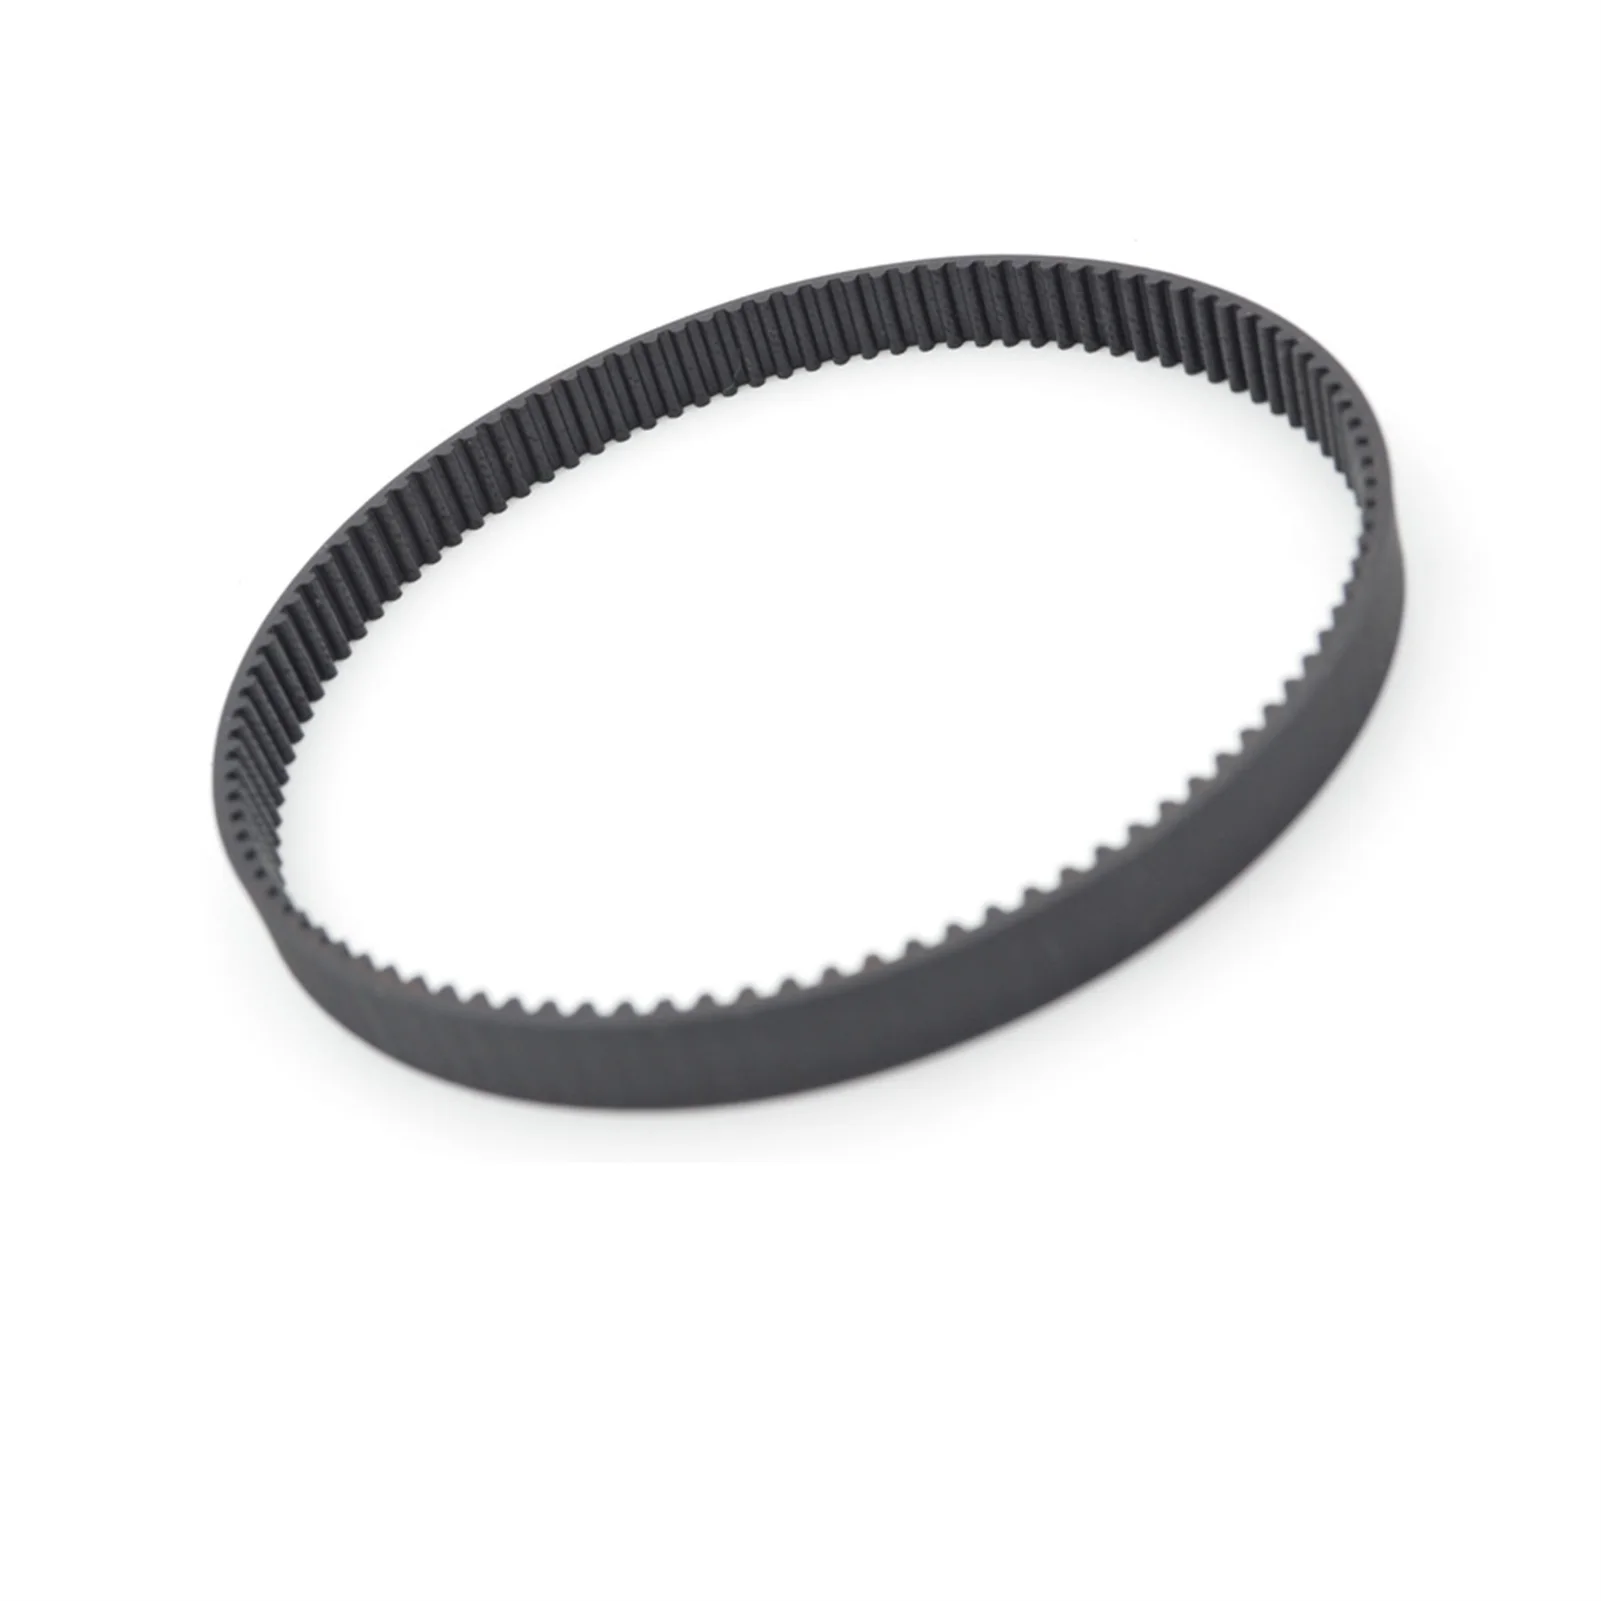 

Black Rubber Closed Loop Timing Belt, Width 12mm 9mm,HTD3M Belt, Length 339mm, 113 Teeth, Pitch 3mm, 339-3M Synchronous Belt